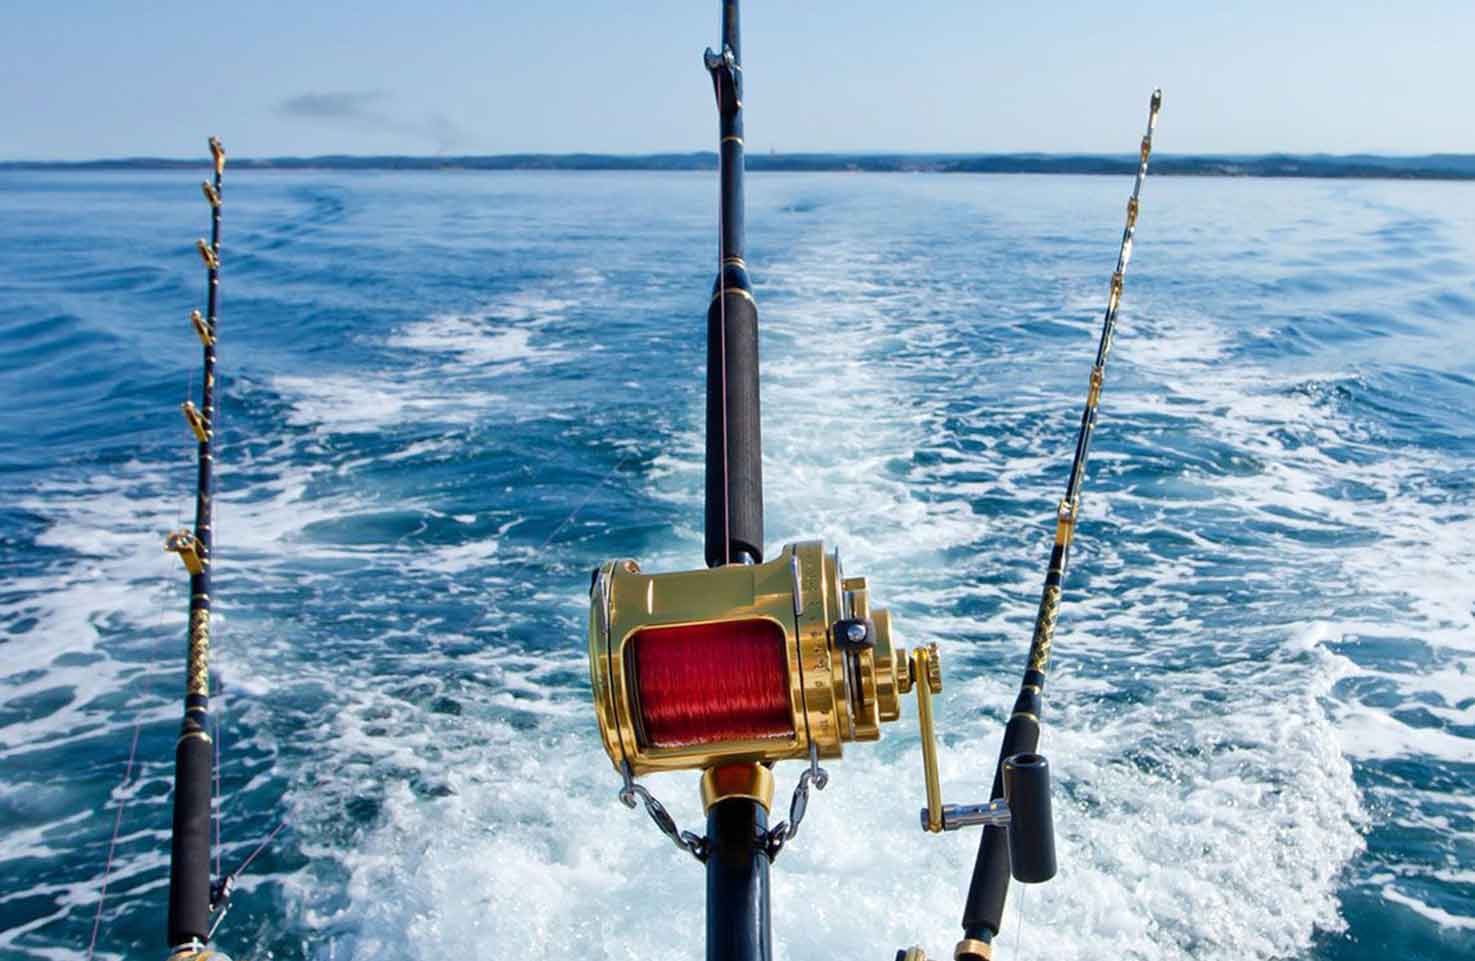 NZ Sport Fishing Council